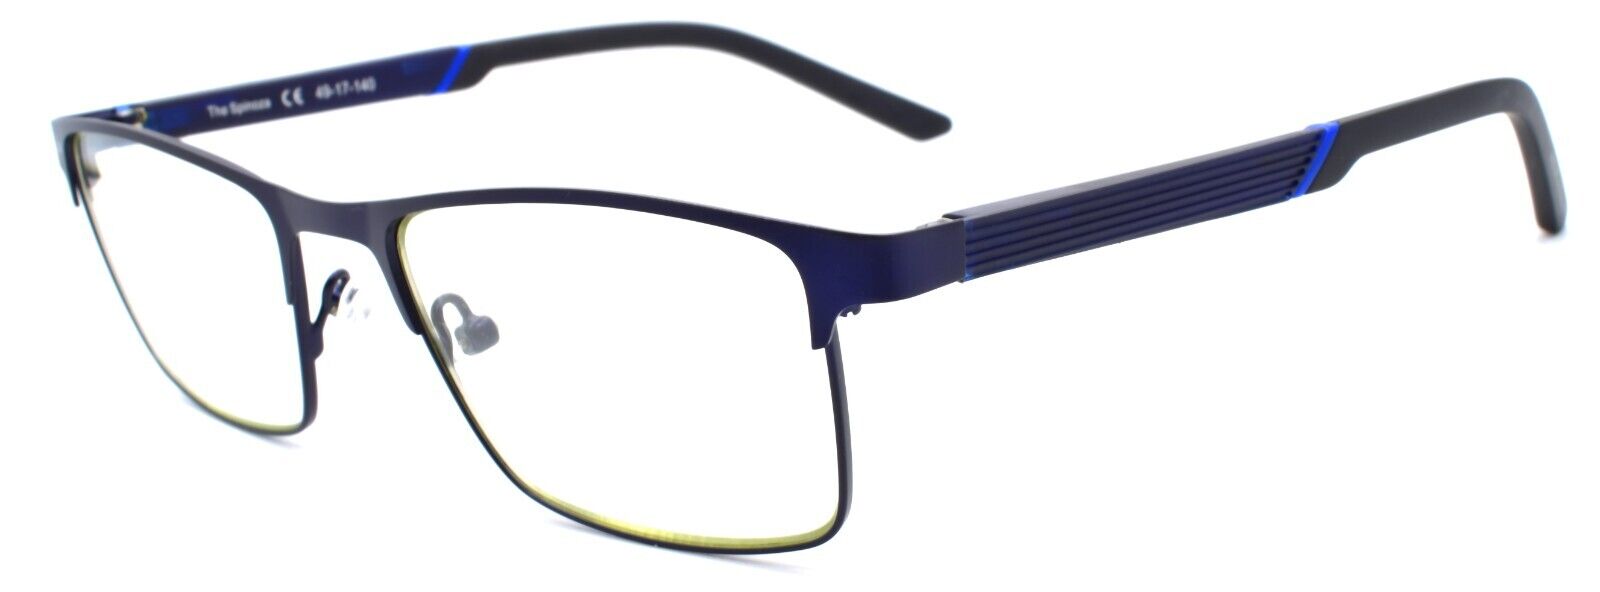 1-Prive Revaux The Spinoza Eyeglasses Frames Small 49-17-140 Midnight Blue-818893023279-IKSpecs